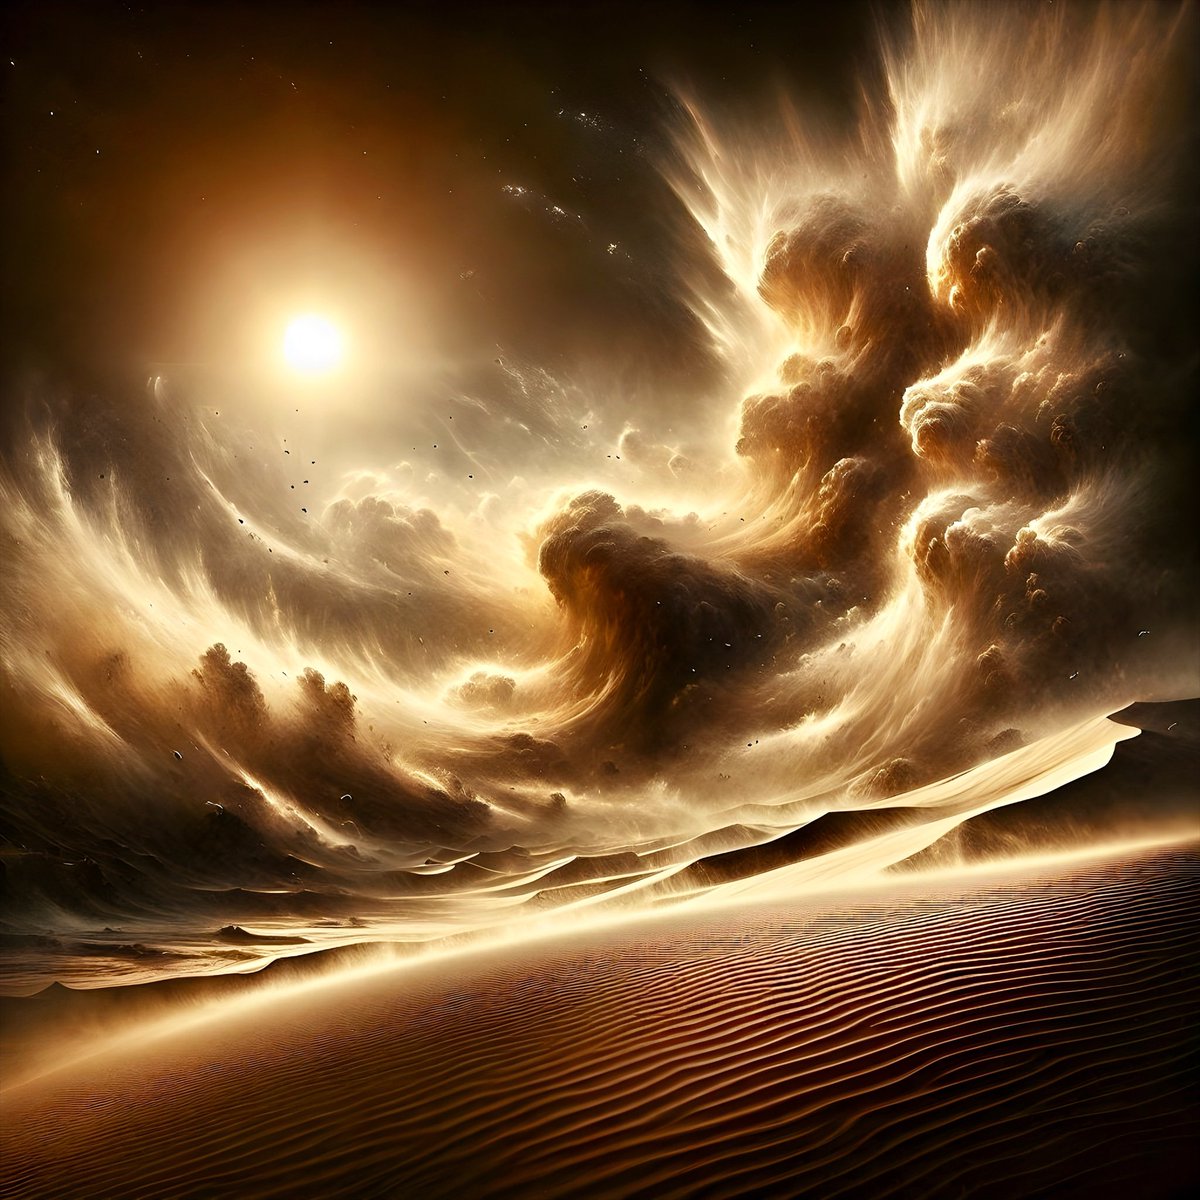 AI Artwork Title:
Sandstorm